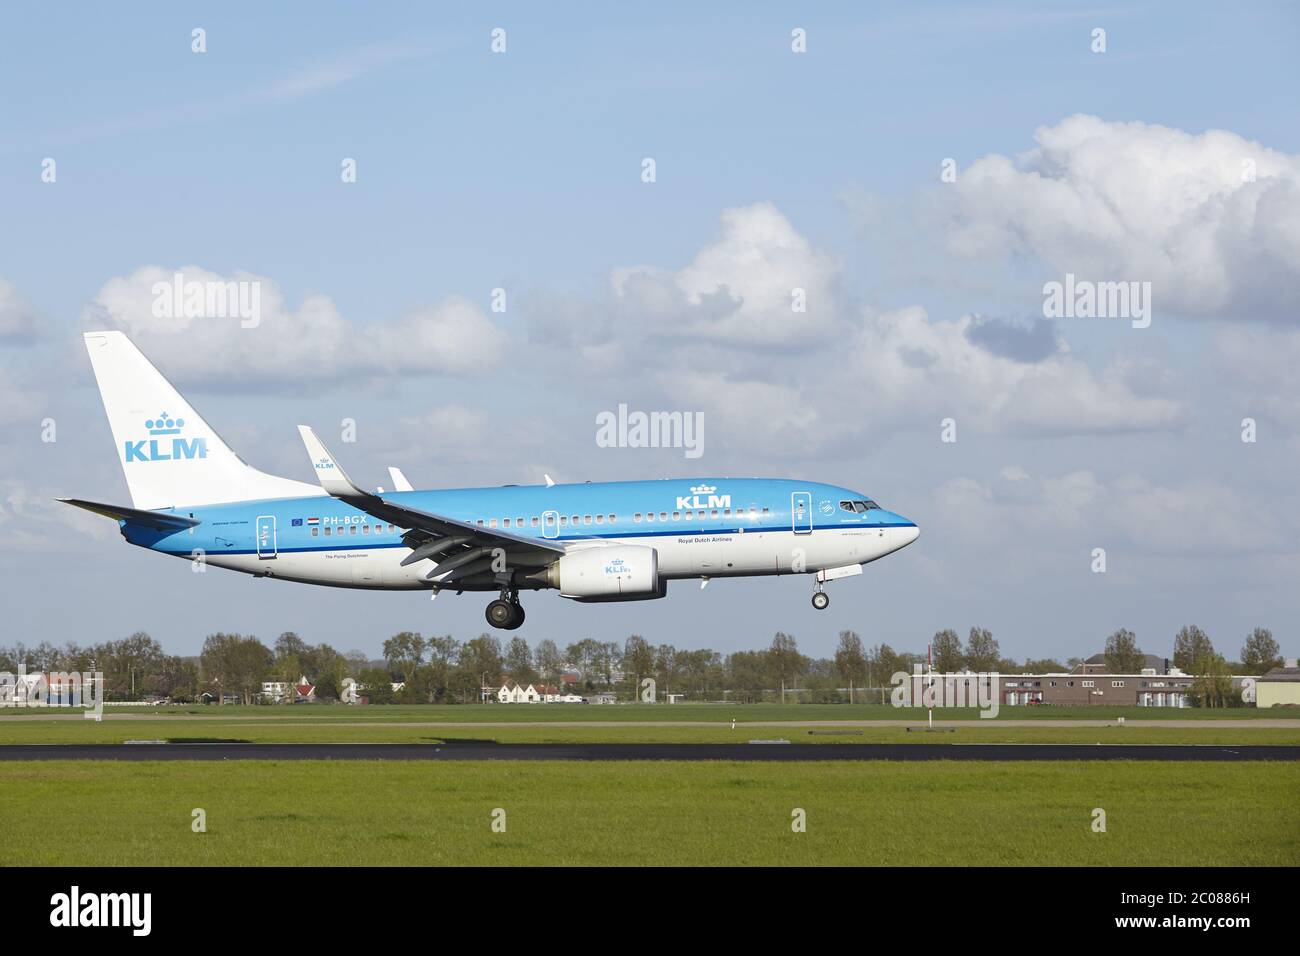 Aeroporto Flughafen Amsterdam Schiphol - Boeing 737 del KLM Landset Foto Stock